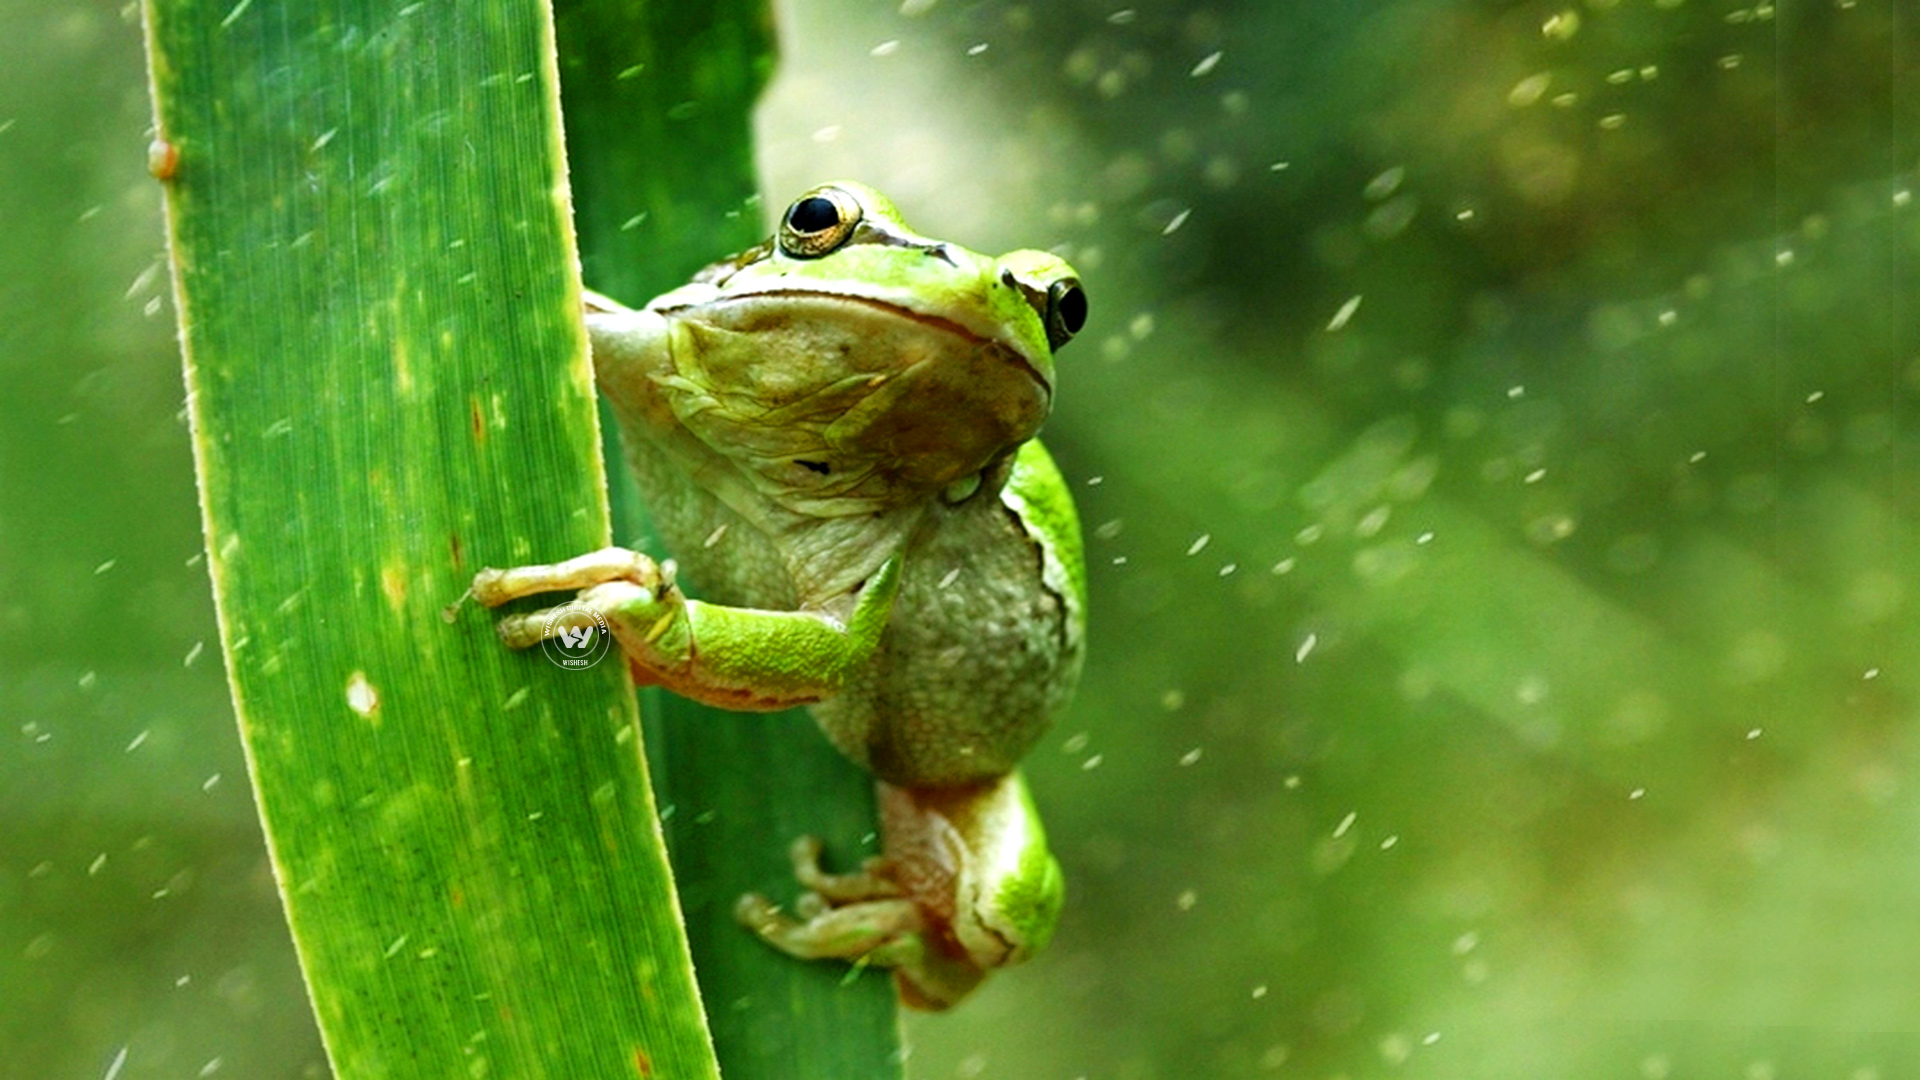 Wallpaper 2of 5 | rain | Frog in the rain | Frog in the rain